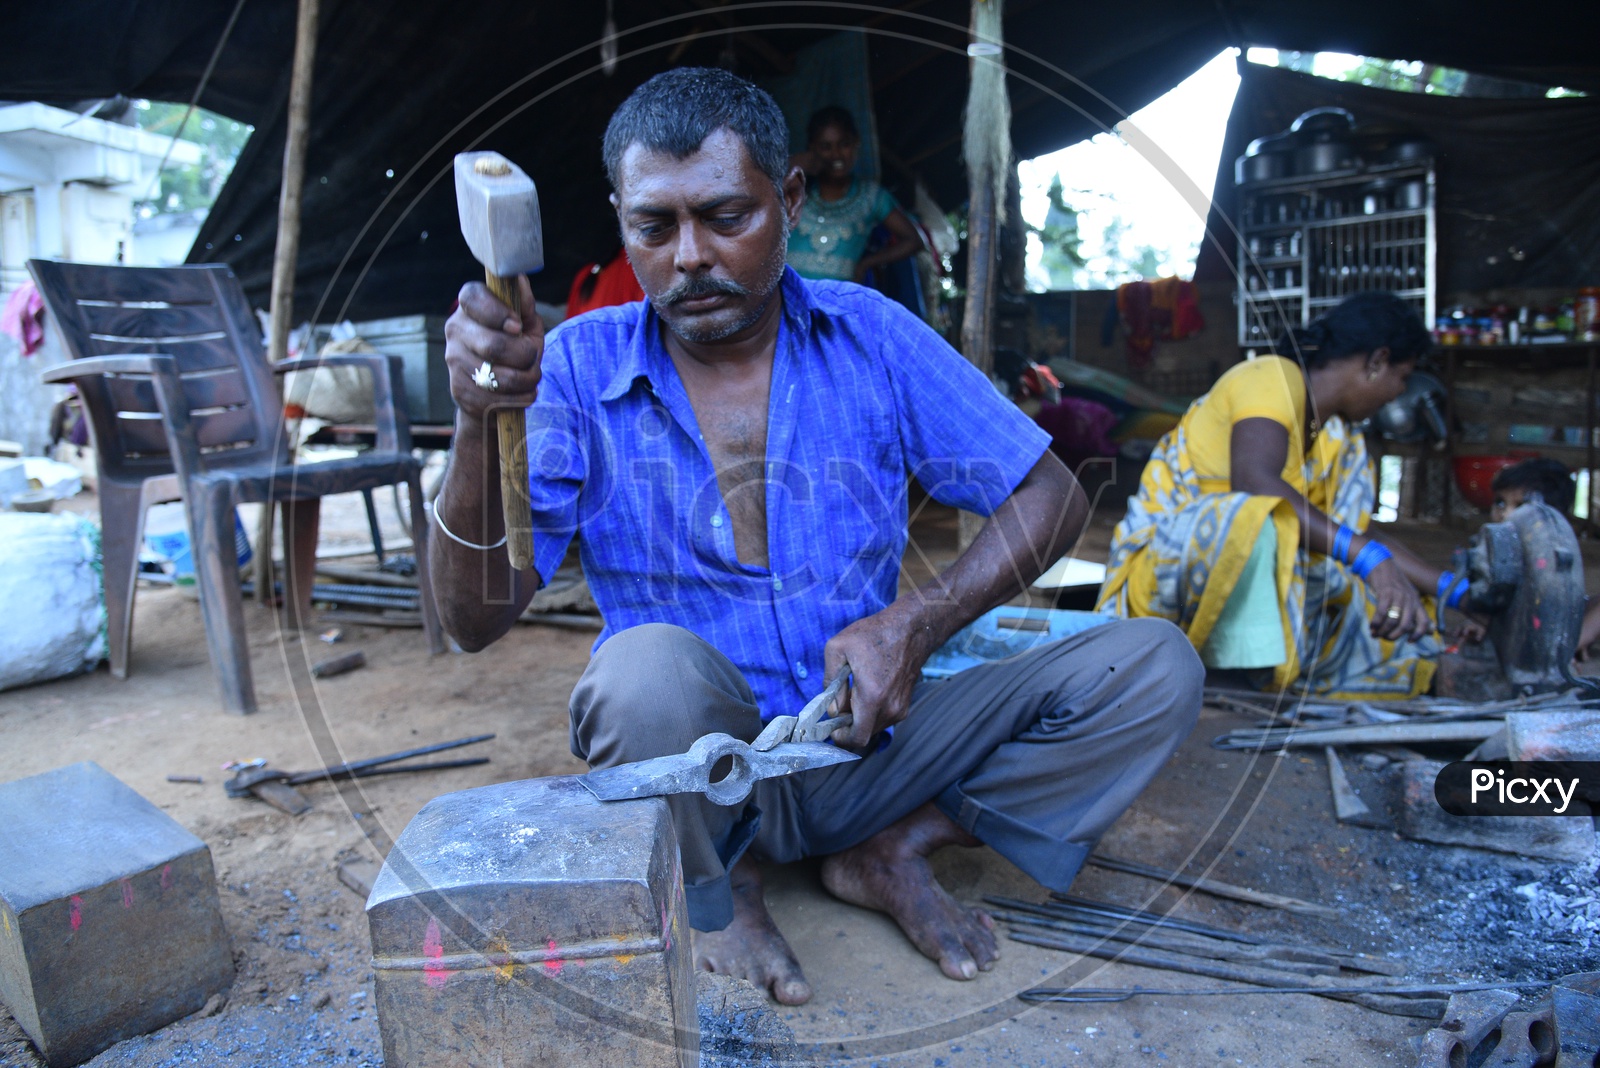 Indian Blacksmith Shaping the Iron Axe Blade using Hammer